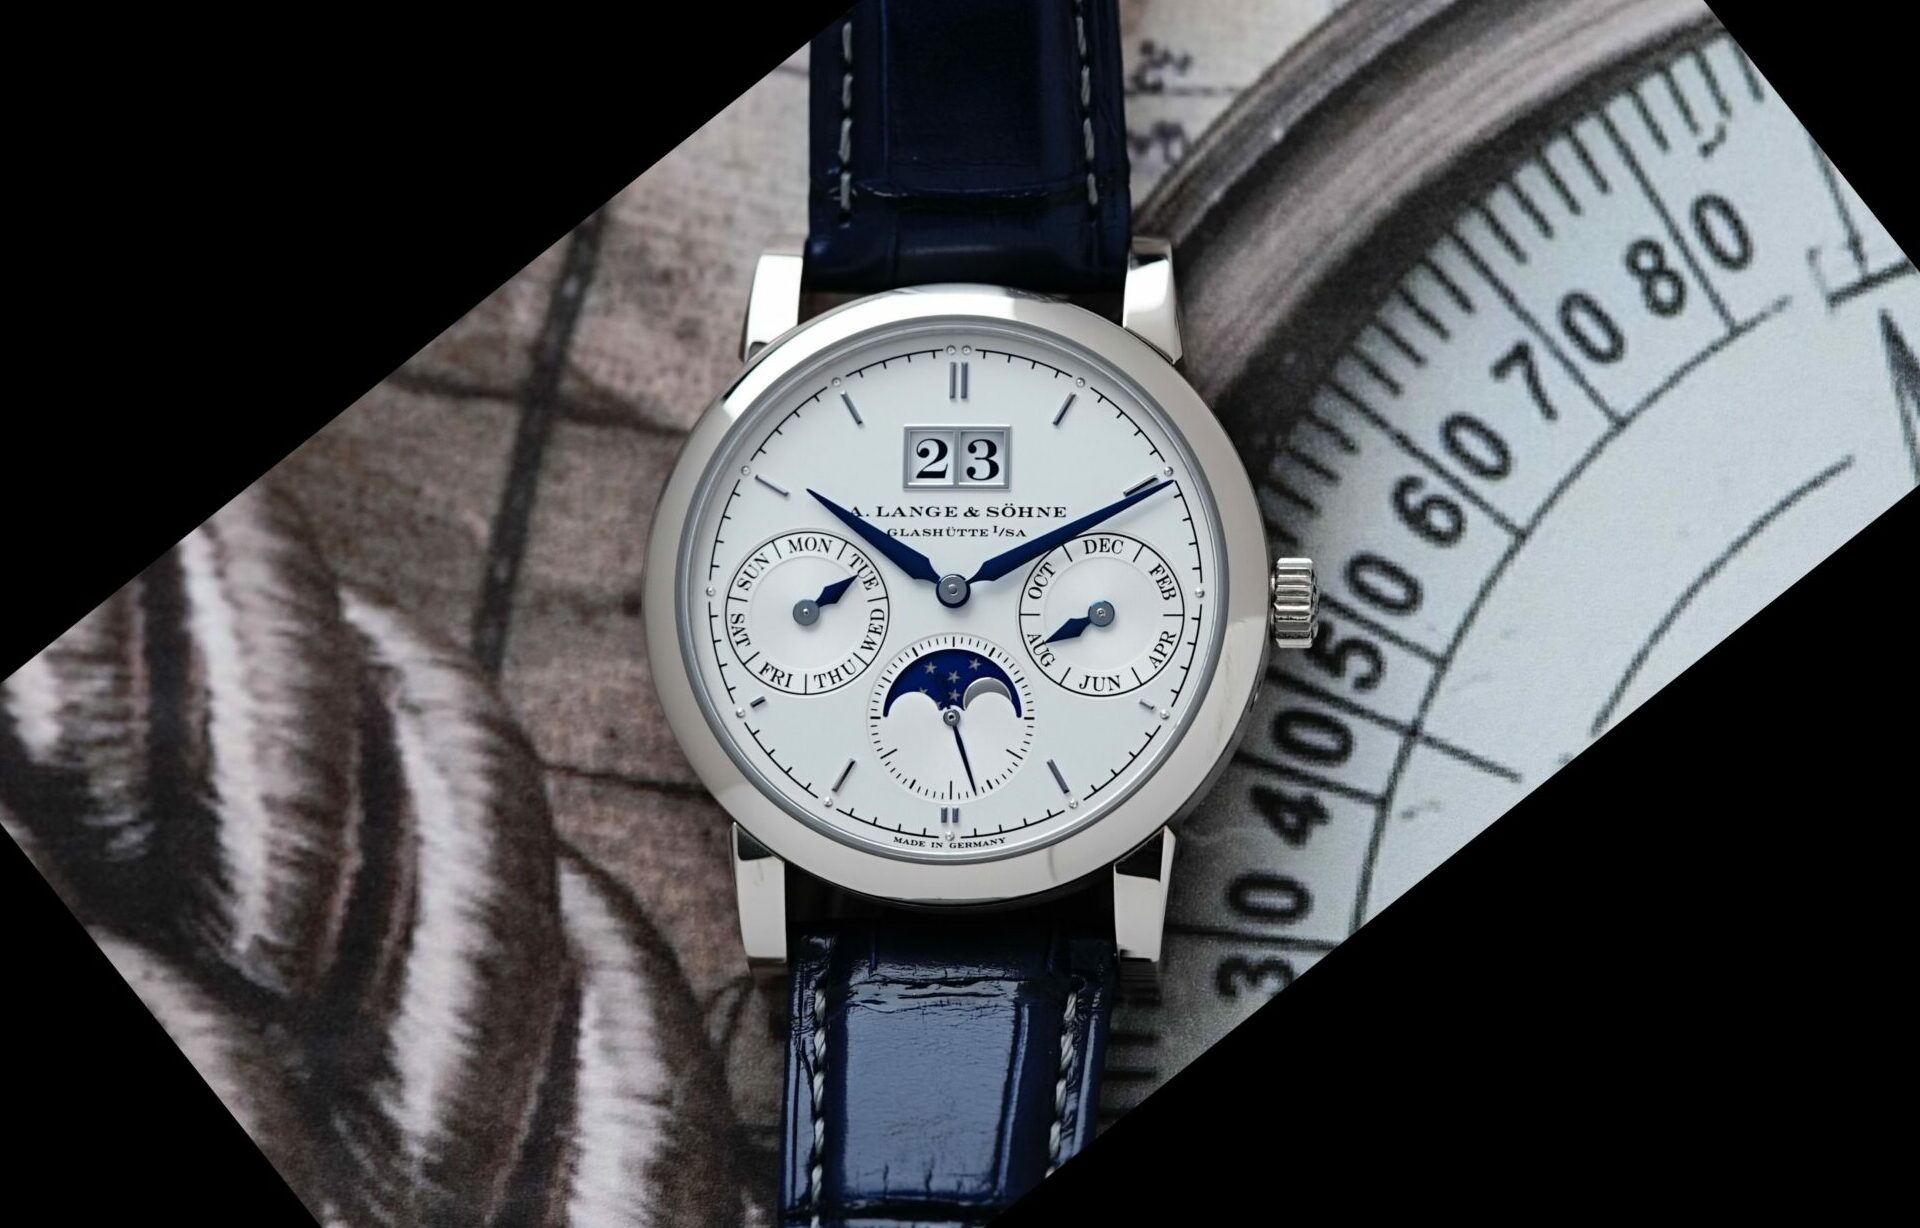 A. Lange & Söhne Saxonia Annual Calendar watch featured under white lighting.